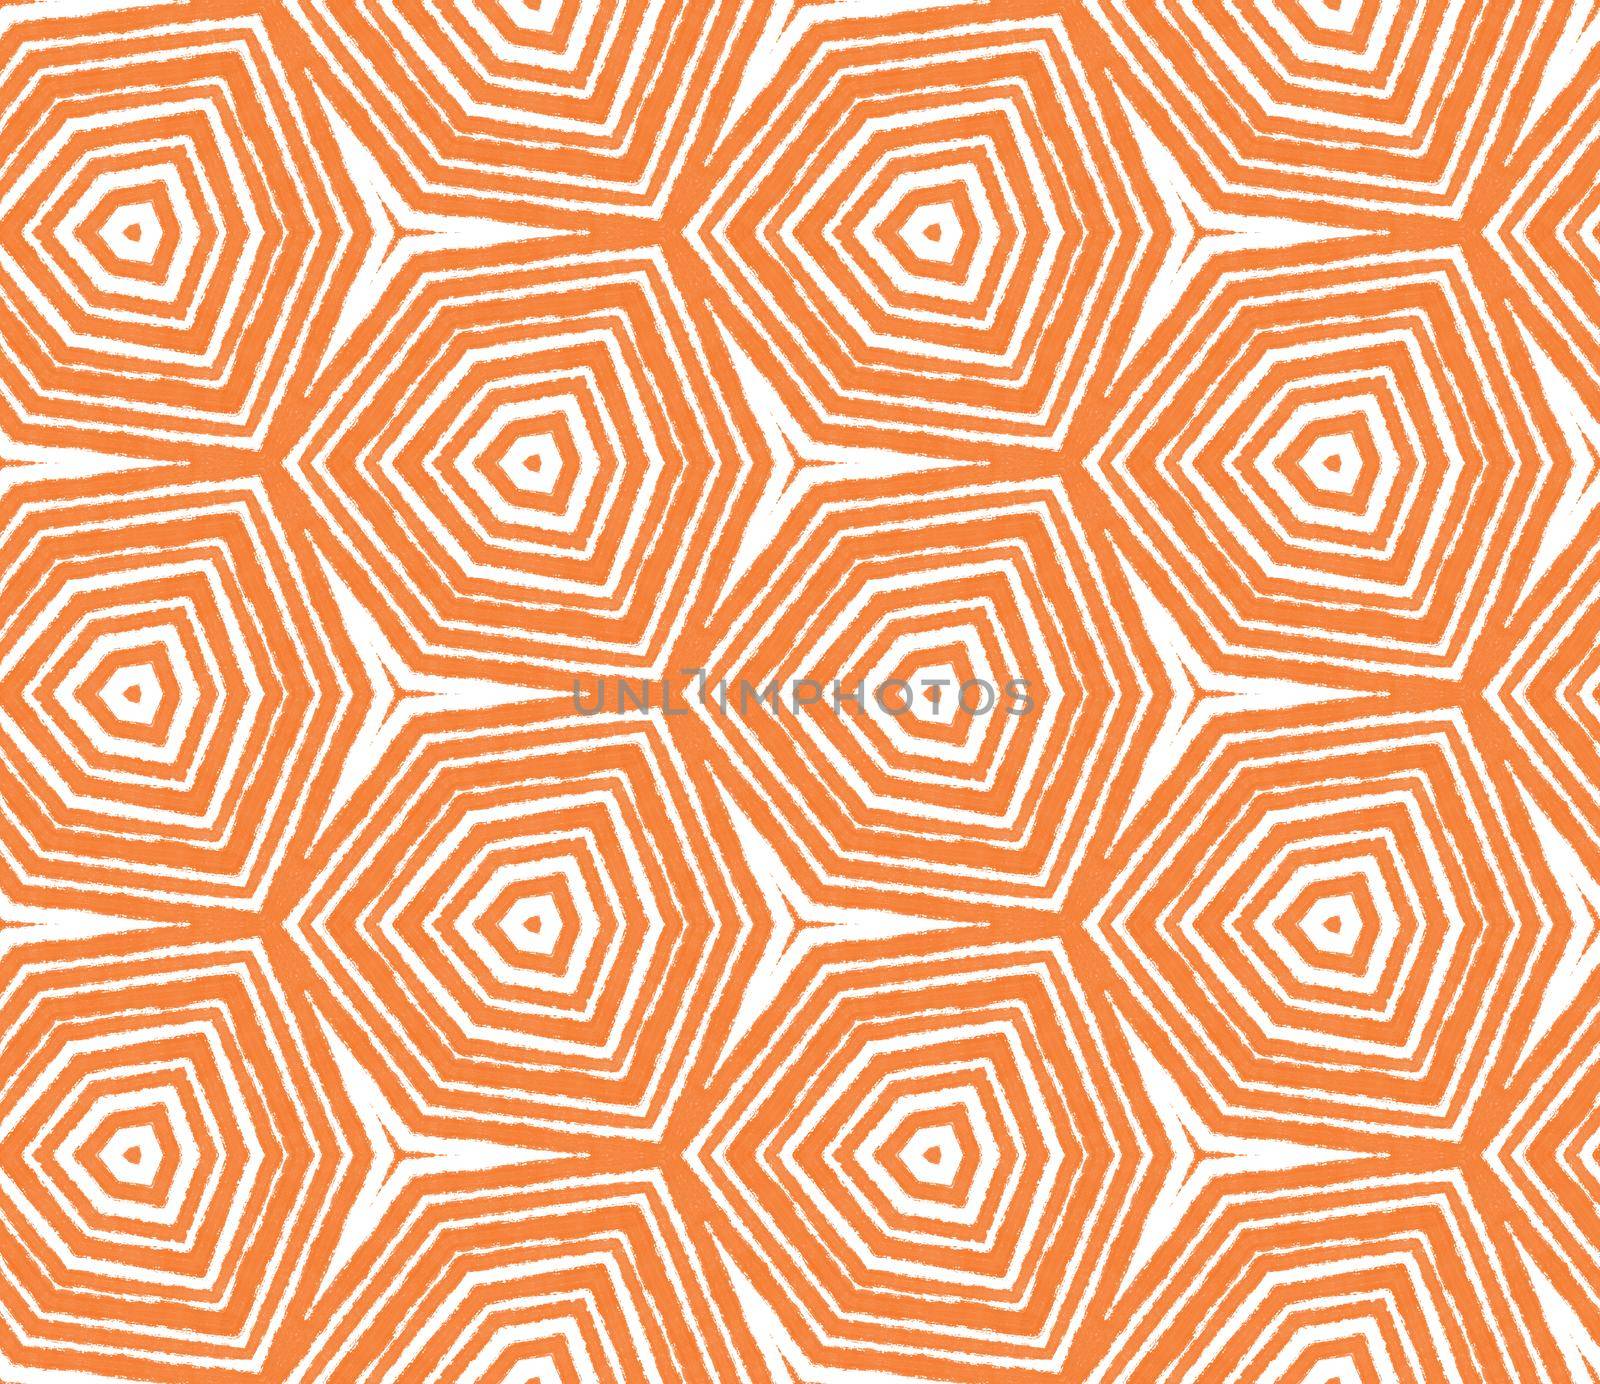 Striped hand drawn pattern. Orange symmetrical by beginagain